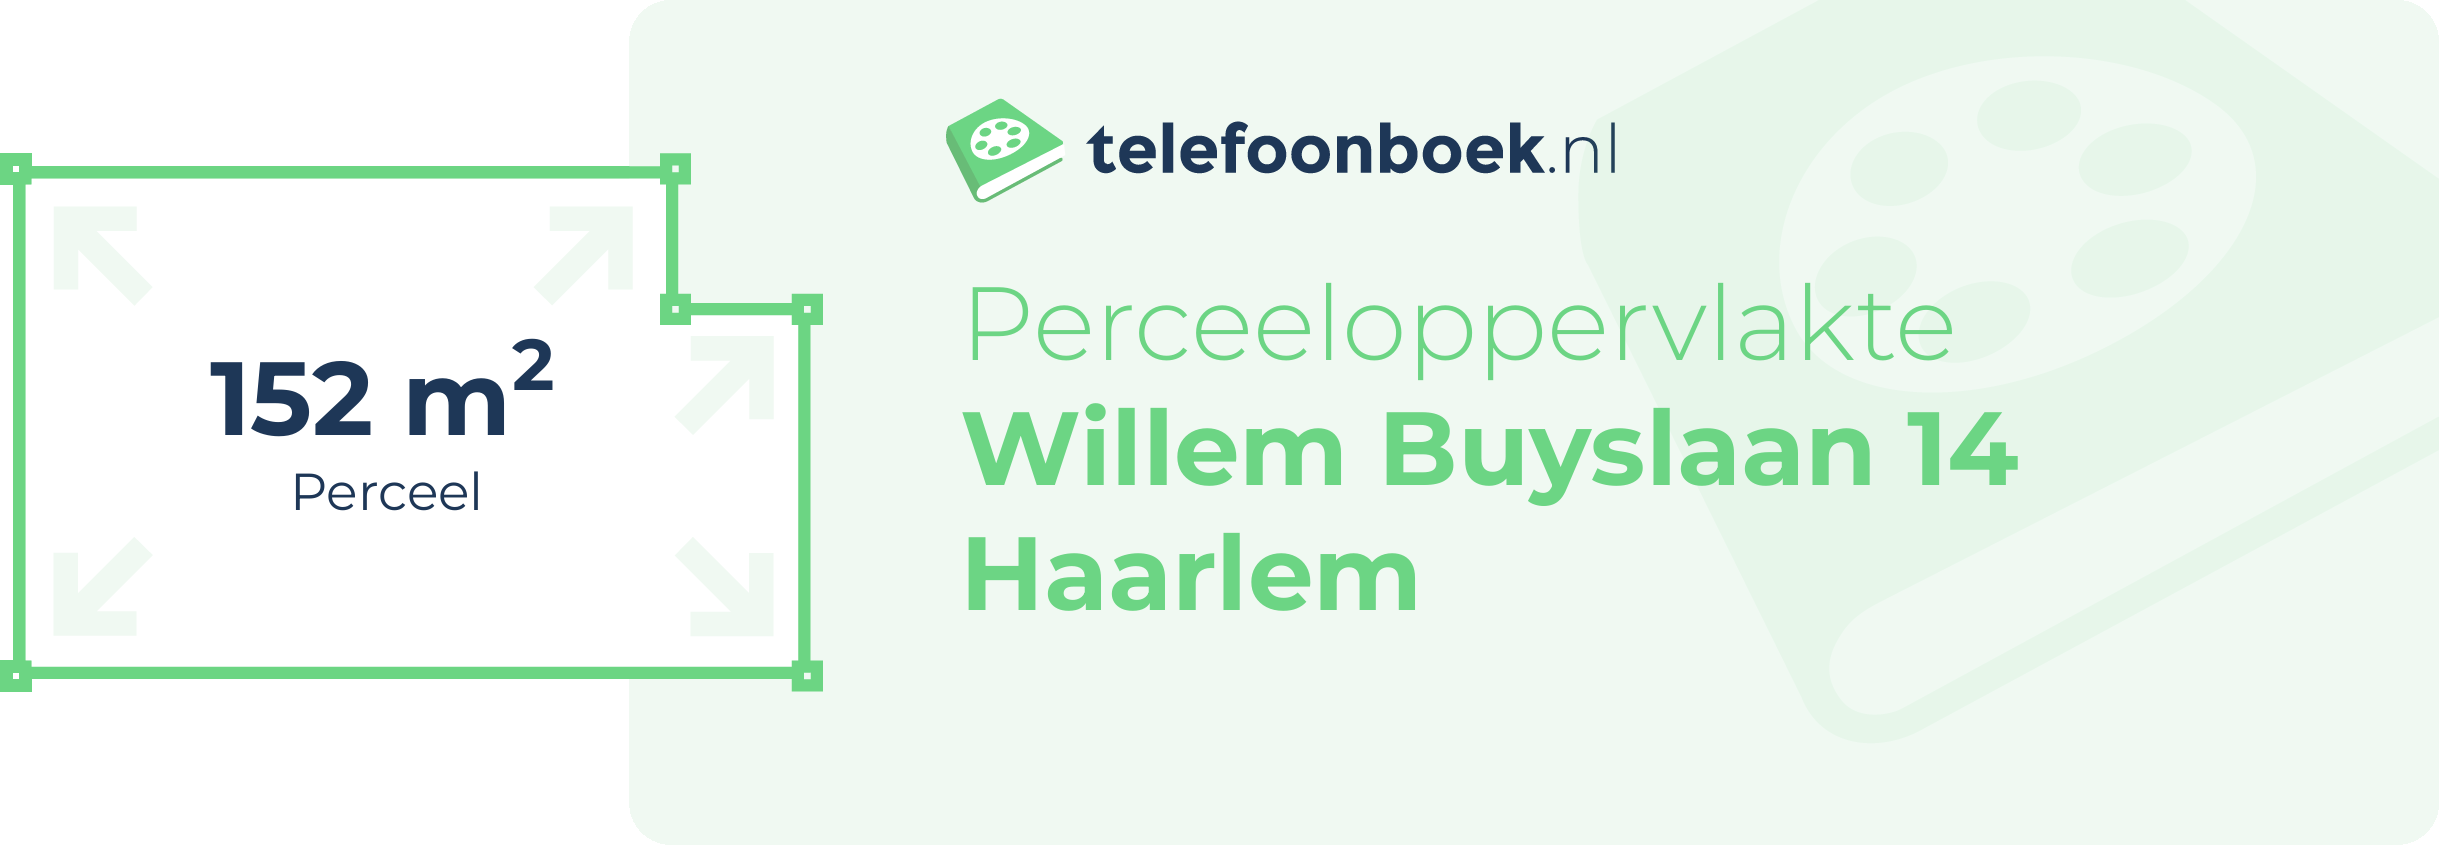 Perceeloppervlakte Willem Buyslaan 14 Haarlem